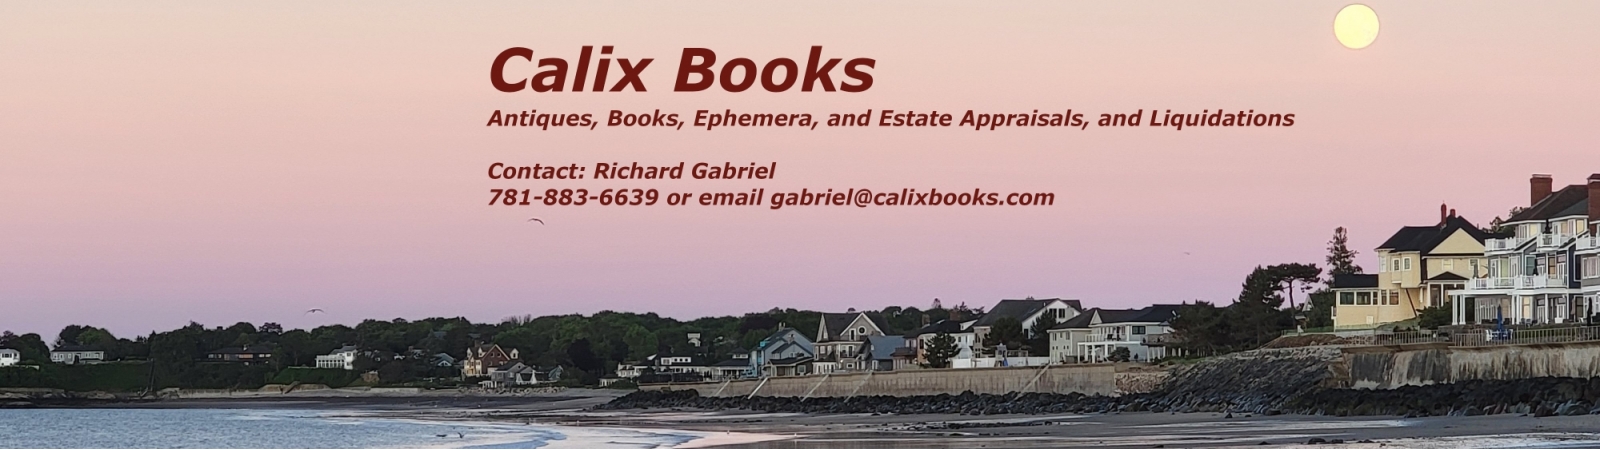 Calix Books | AuctionNinja